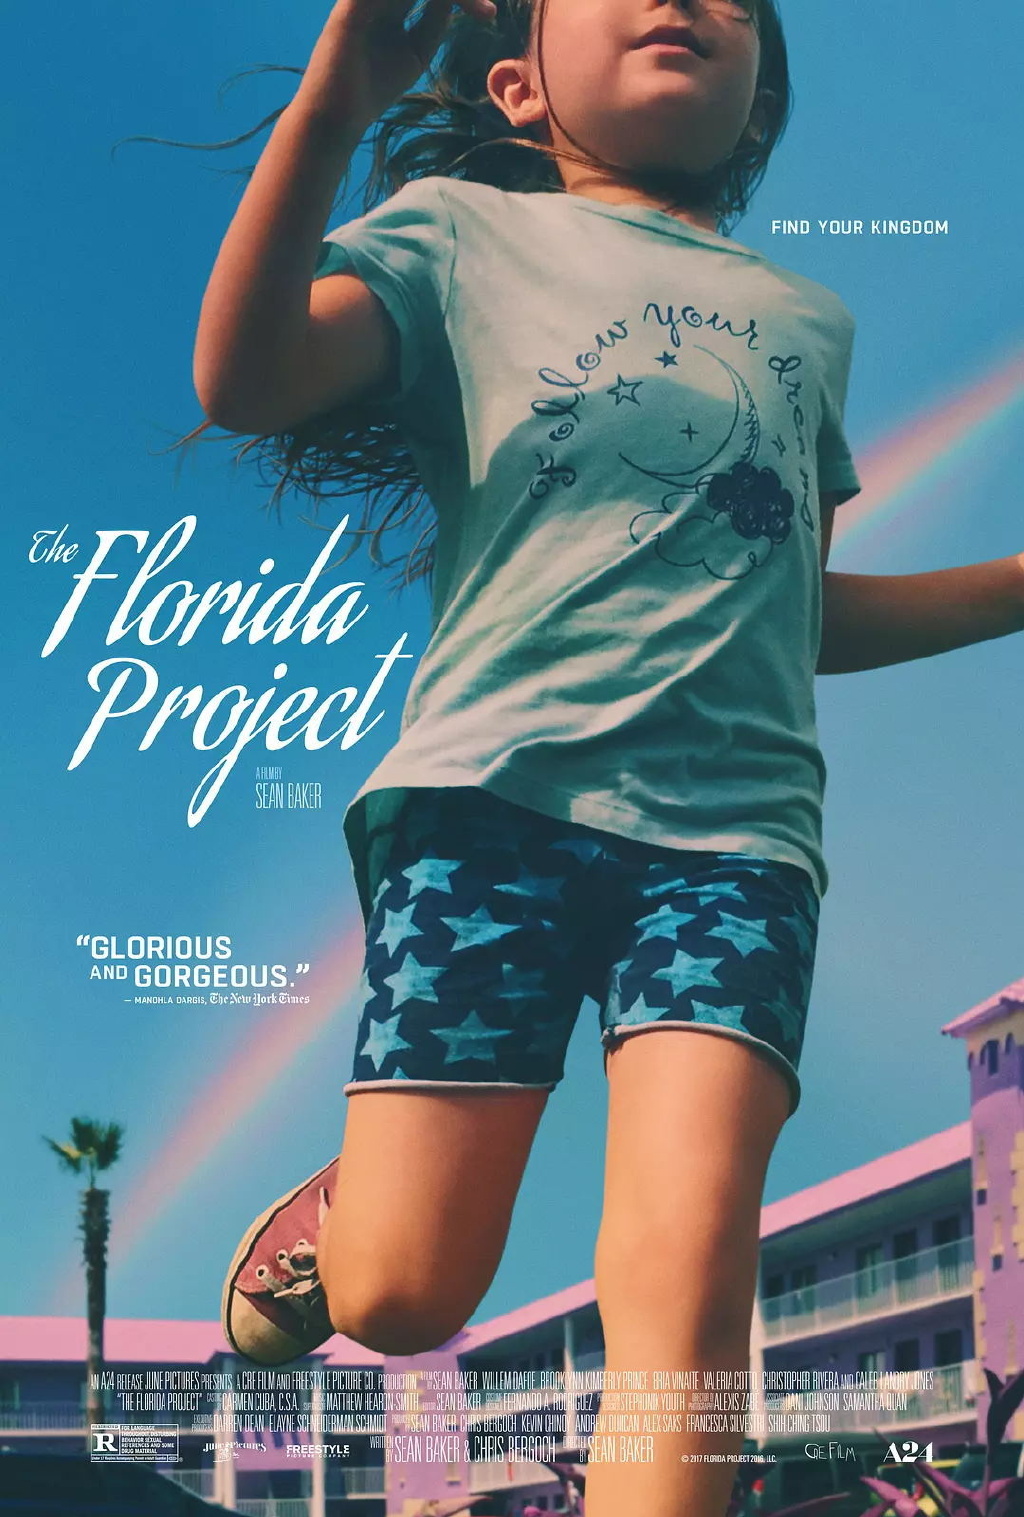 The Florida Project / 迪士尼的夏天(台) / 欢迎光临奇幻城堡(台) / 欢迎光临梦幻乐园 / 佛罗里达公租乐事 / 佛罗里达廉租房 / 佛罗里达项目 / 佛罗里达计划海报